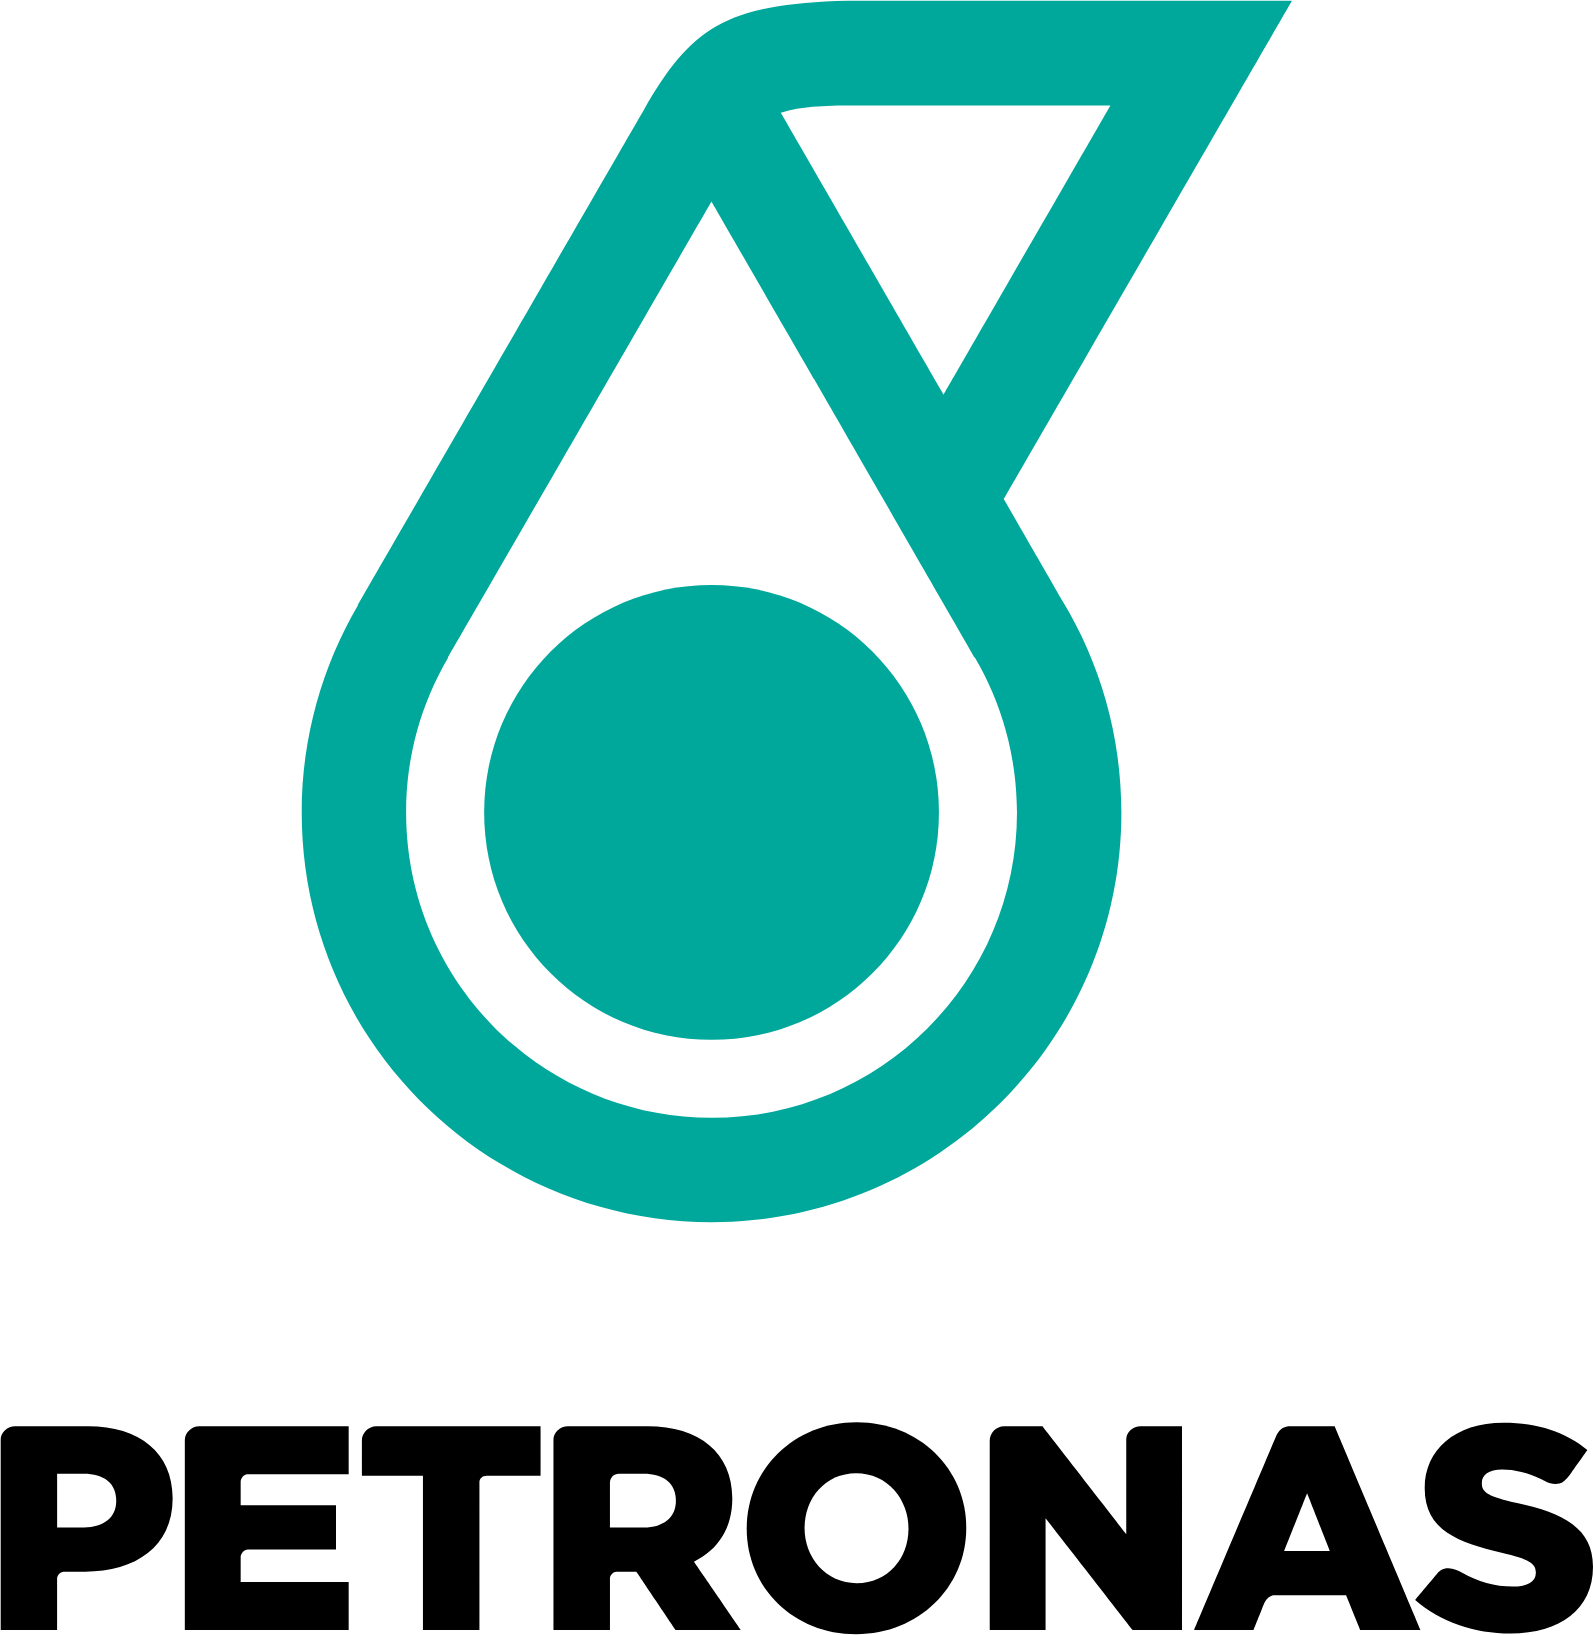 PChem (Petronas Chemicals Group) logo large (transparent PNG)